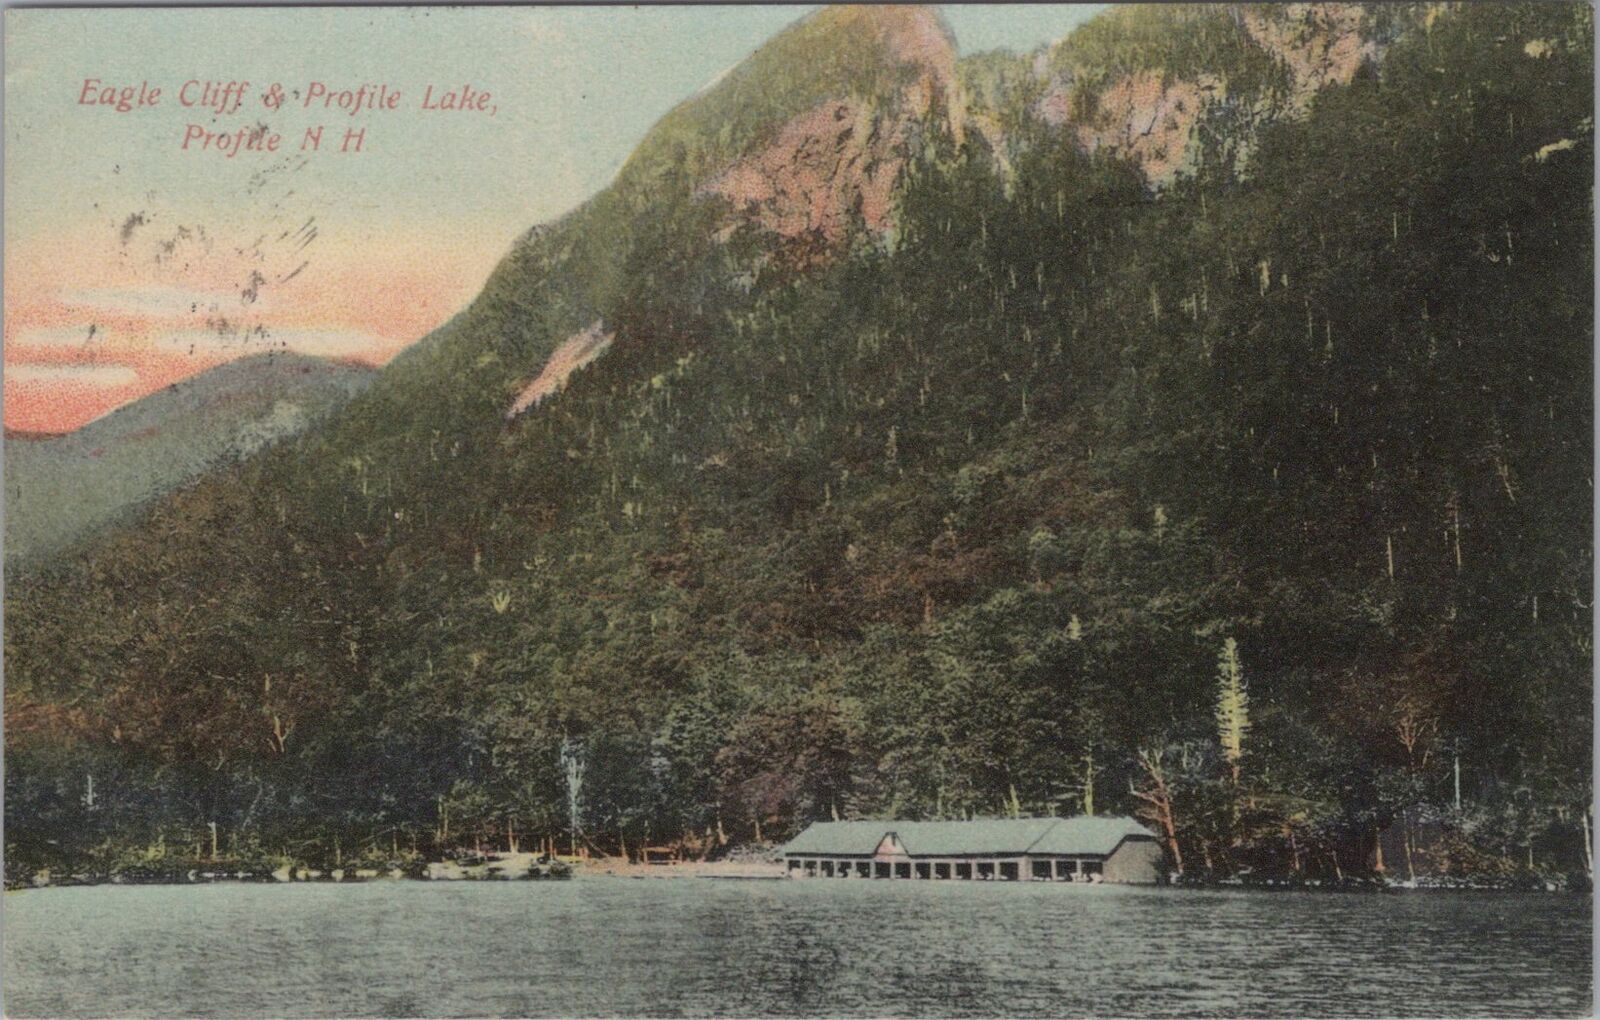 Eagle Cliff & Profile Lake New Hampshire Postcard